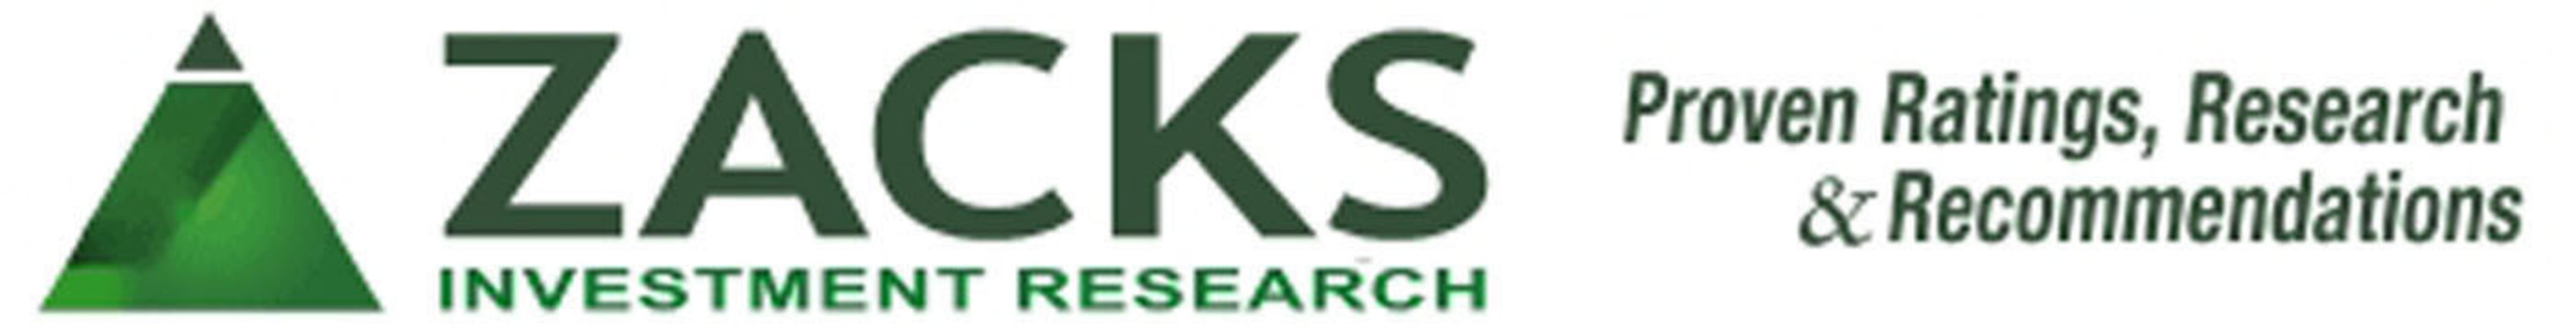 Zacks Investment Research, Inc., www.zacks.com